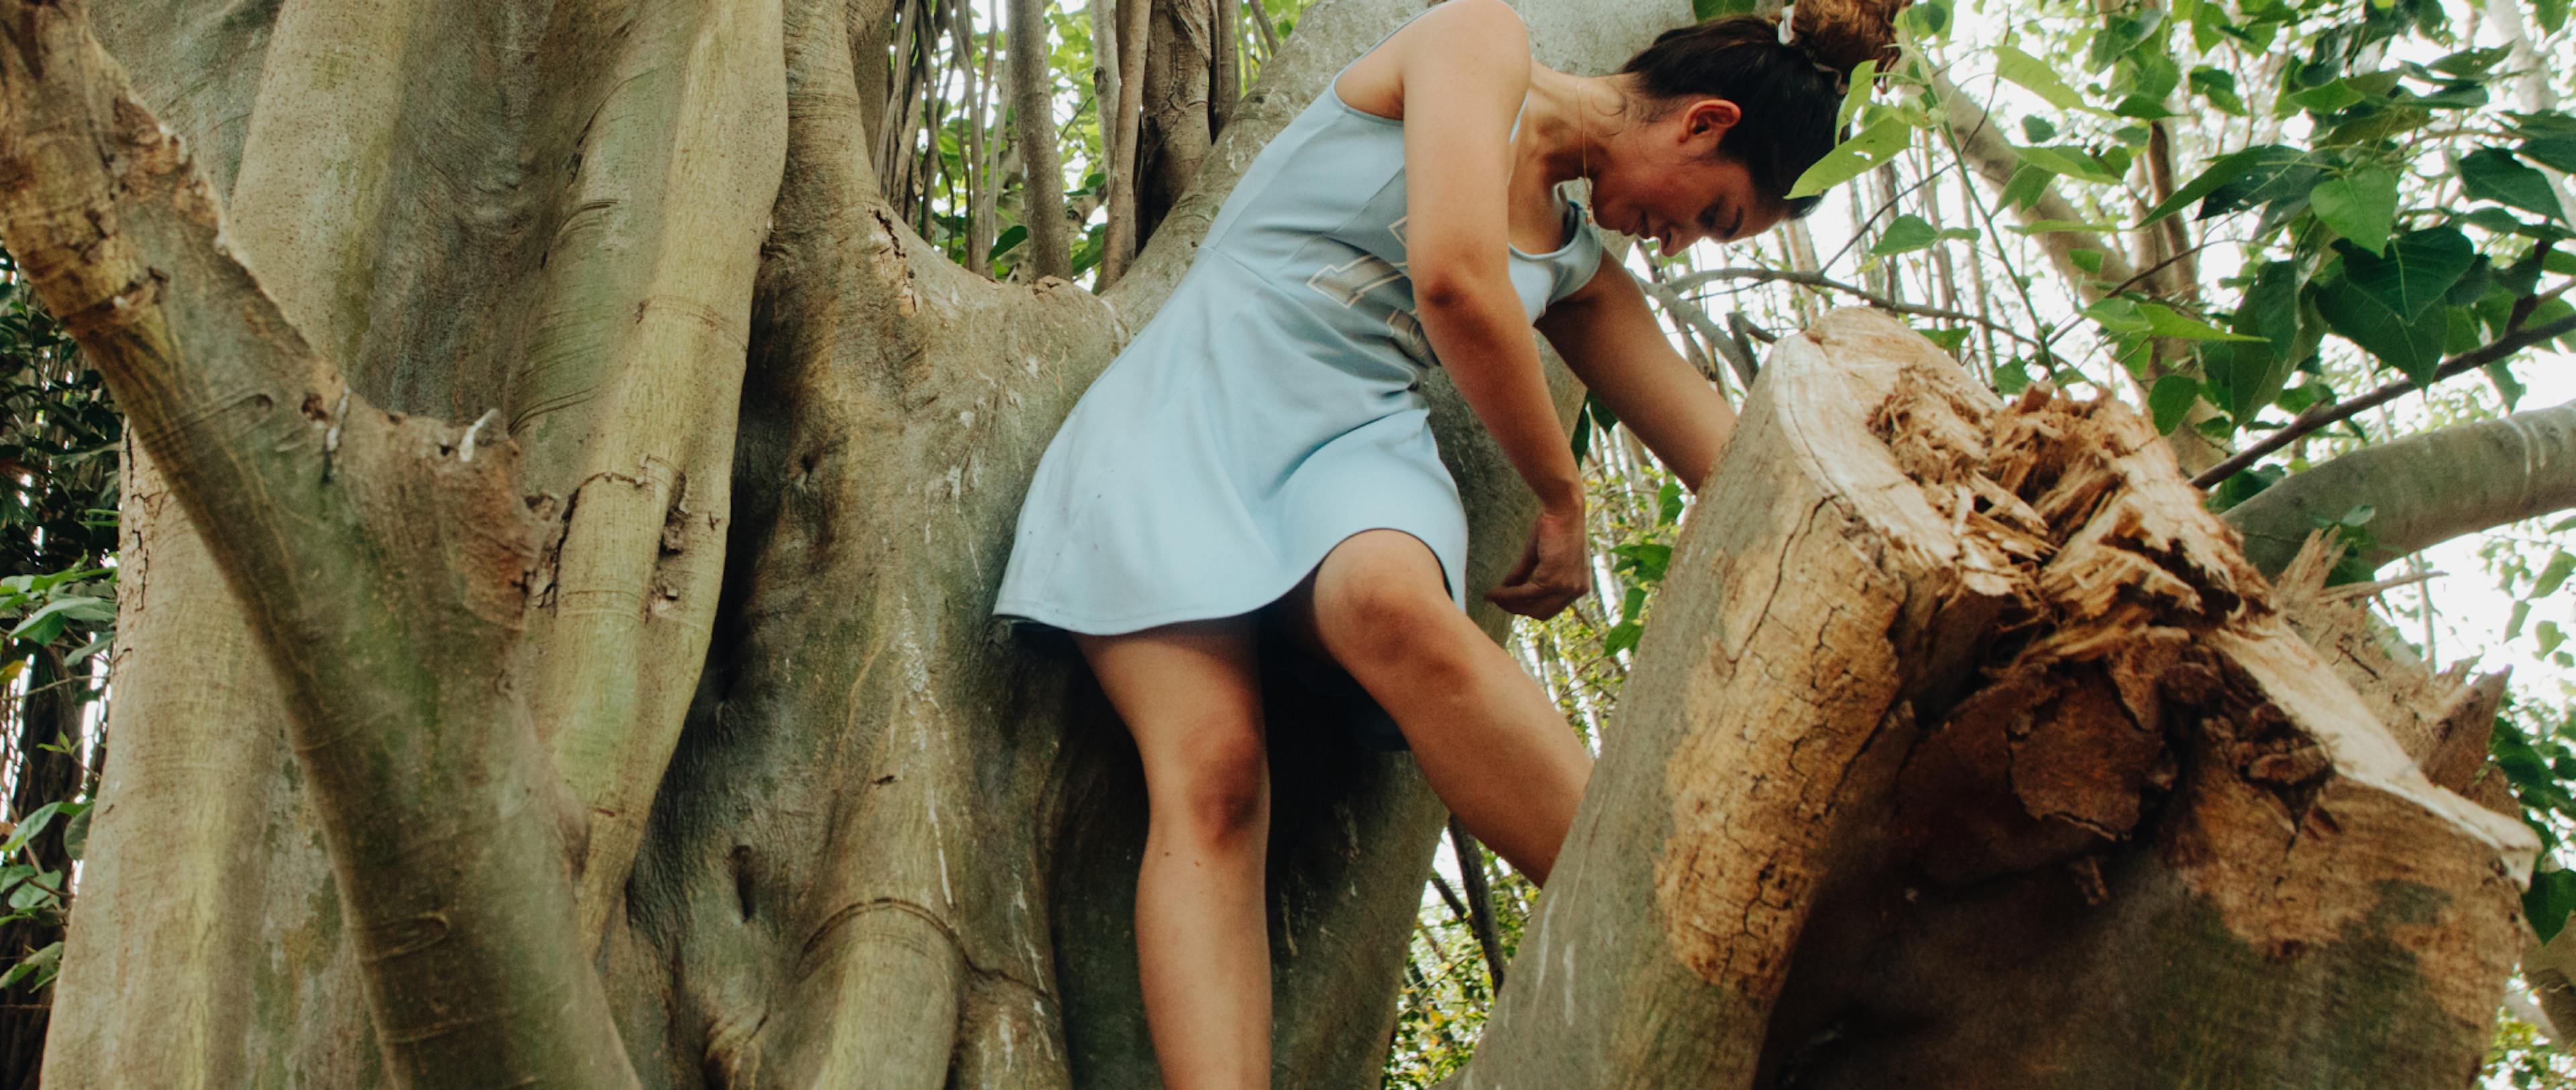 A girl has climbed a tree wearing a blue dress.